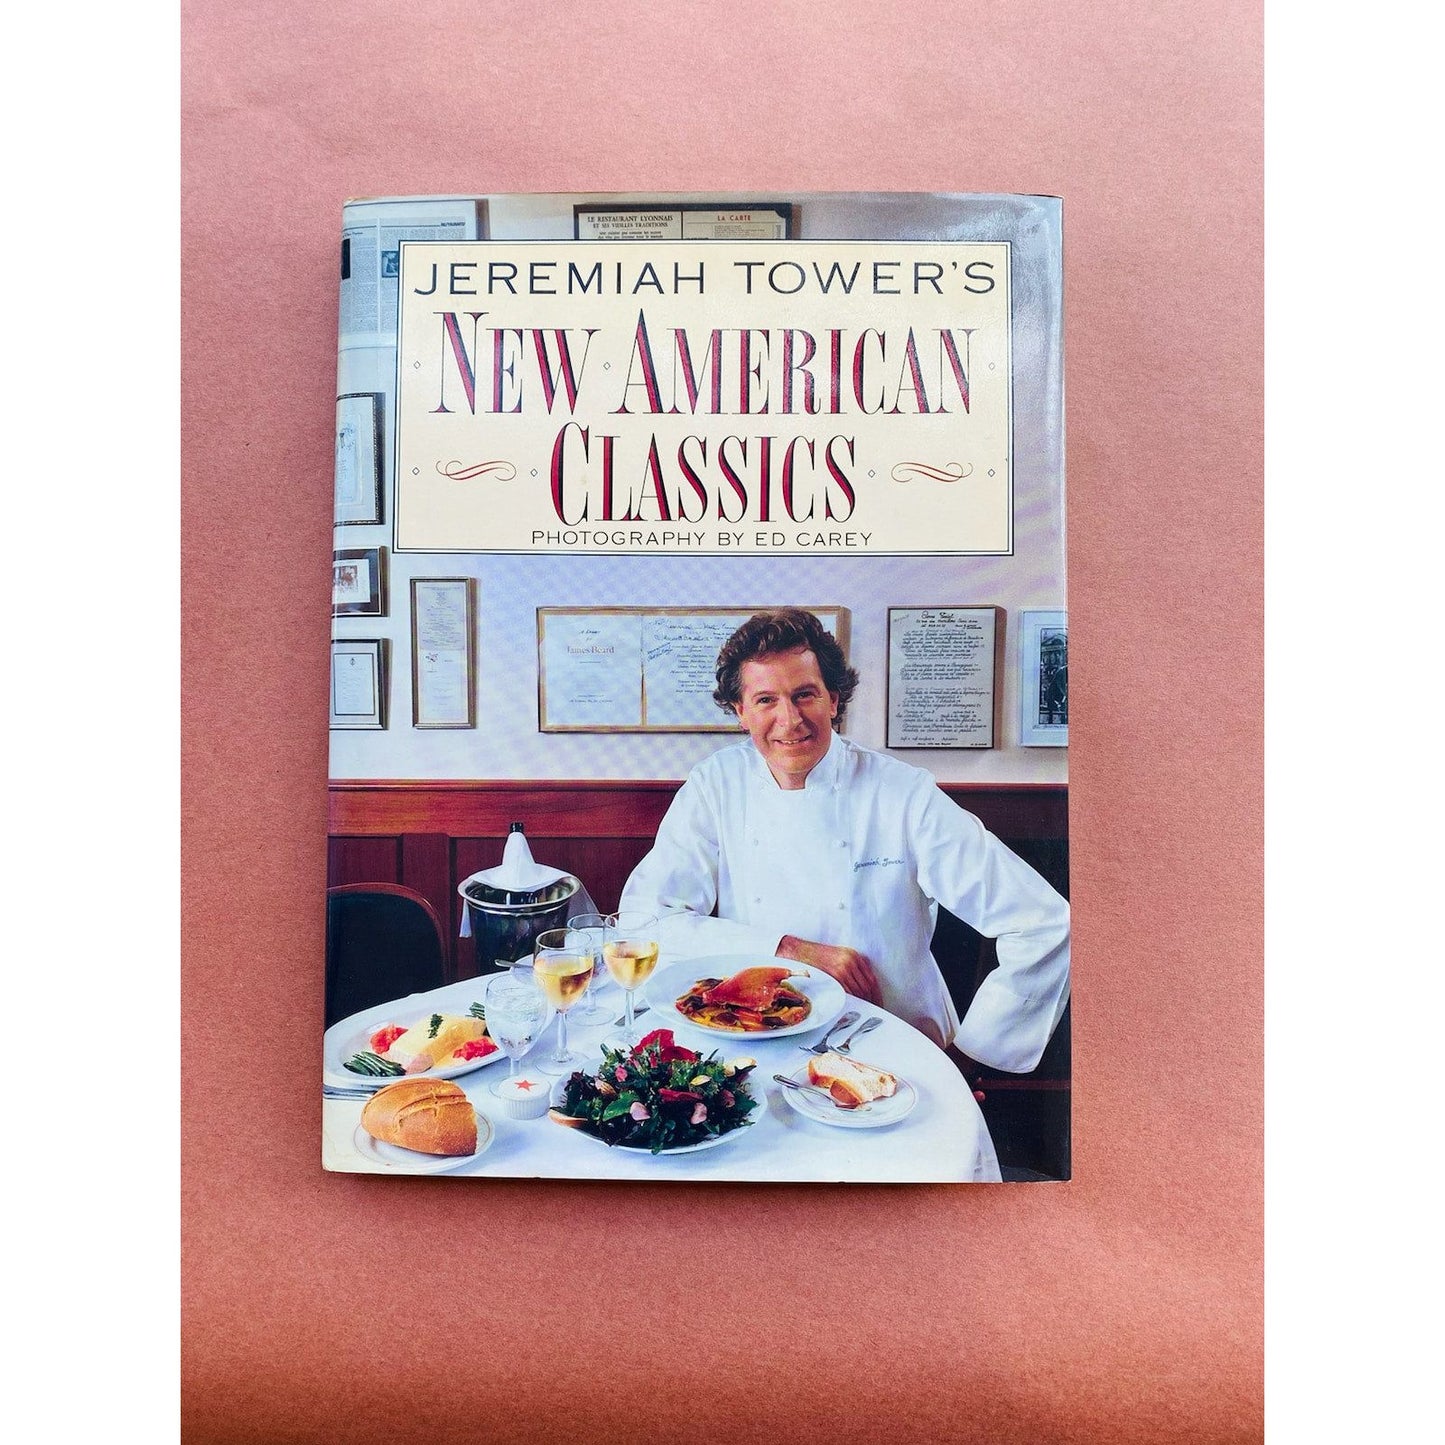 {American} Jeremiah Tower's New American Classics (Jeremiah Tower)  1986